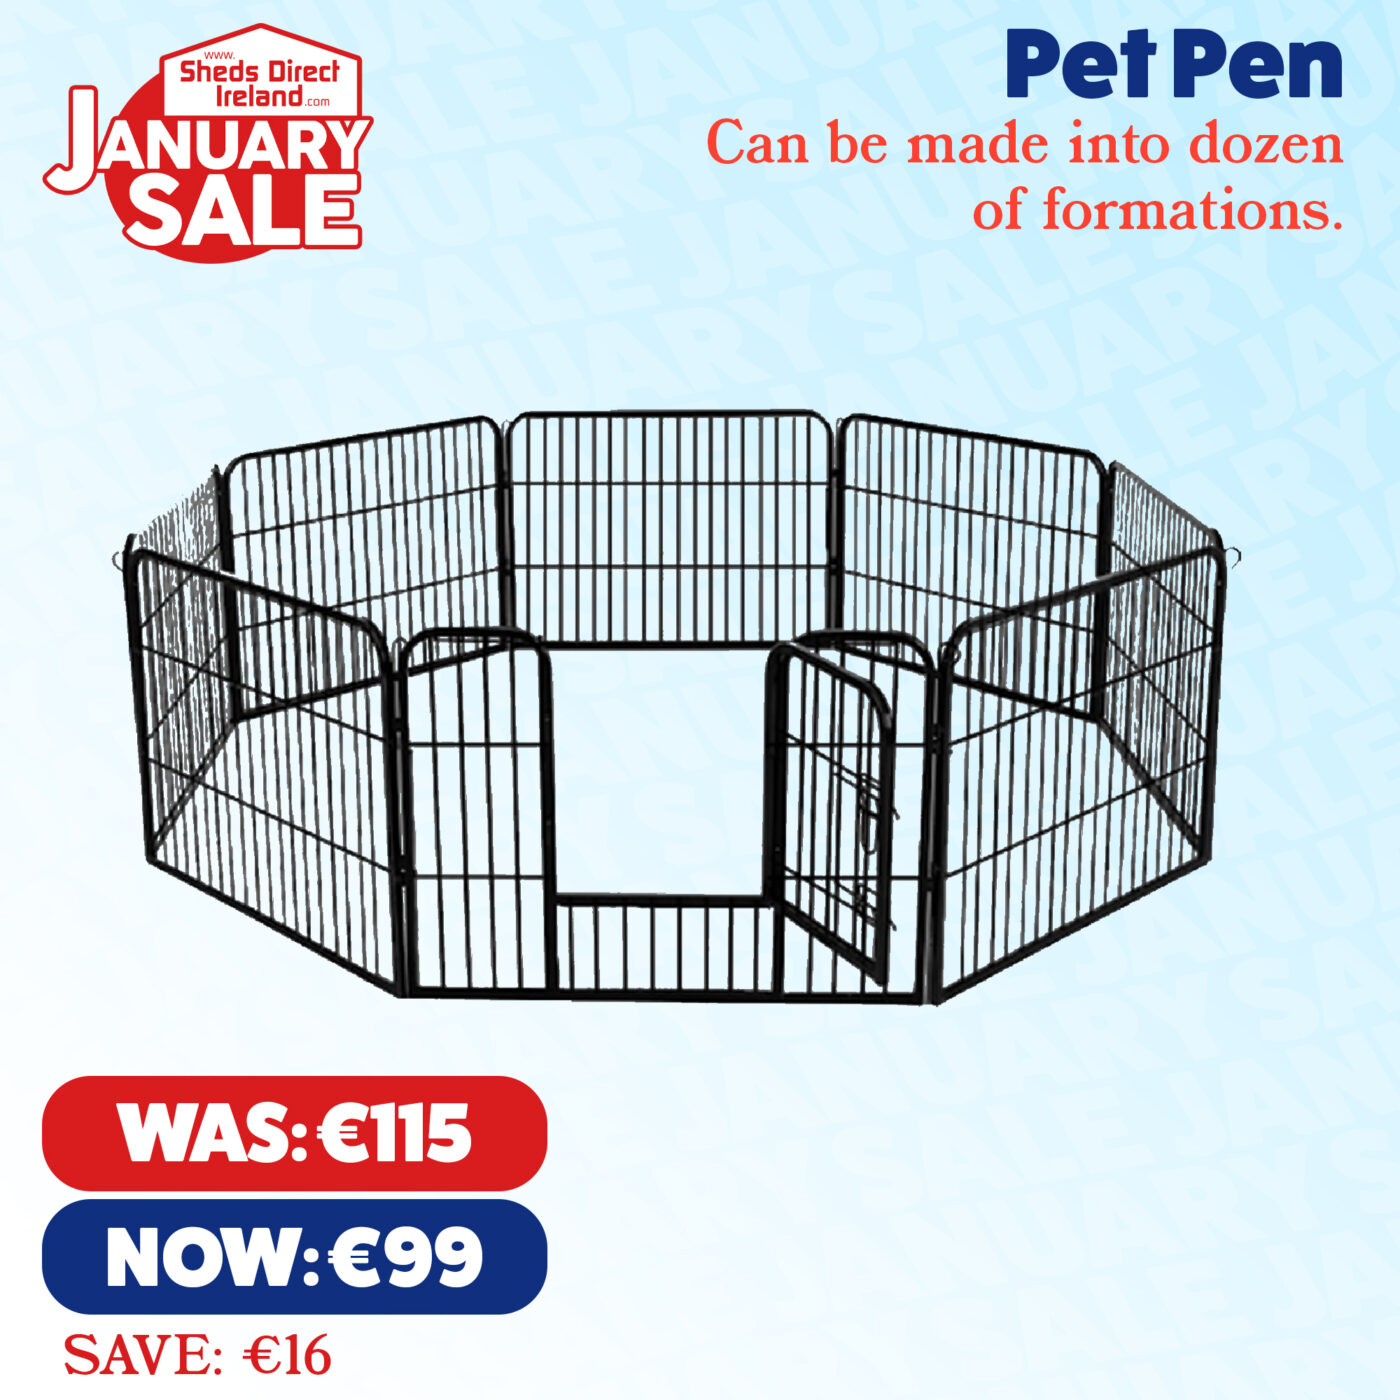 January Sale - Dog Pen